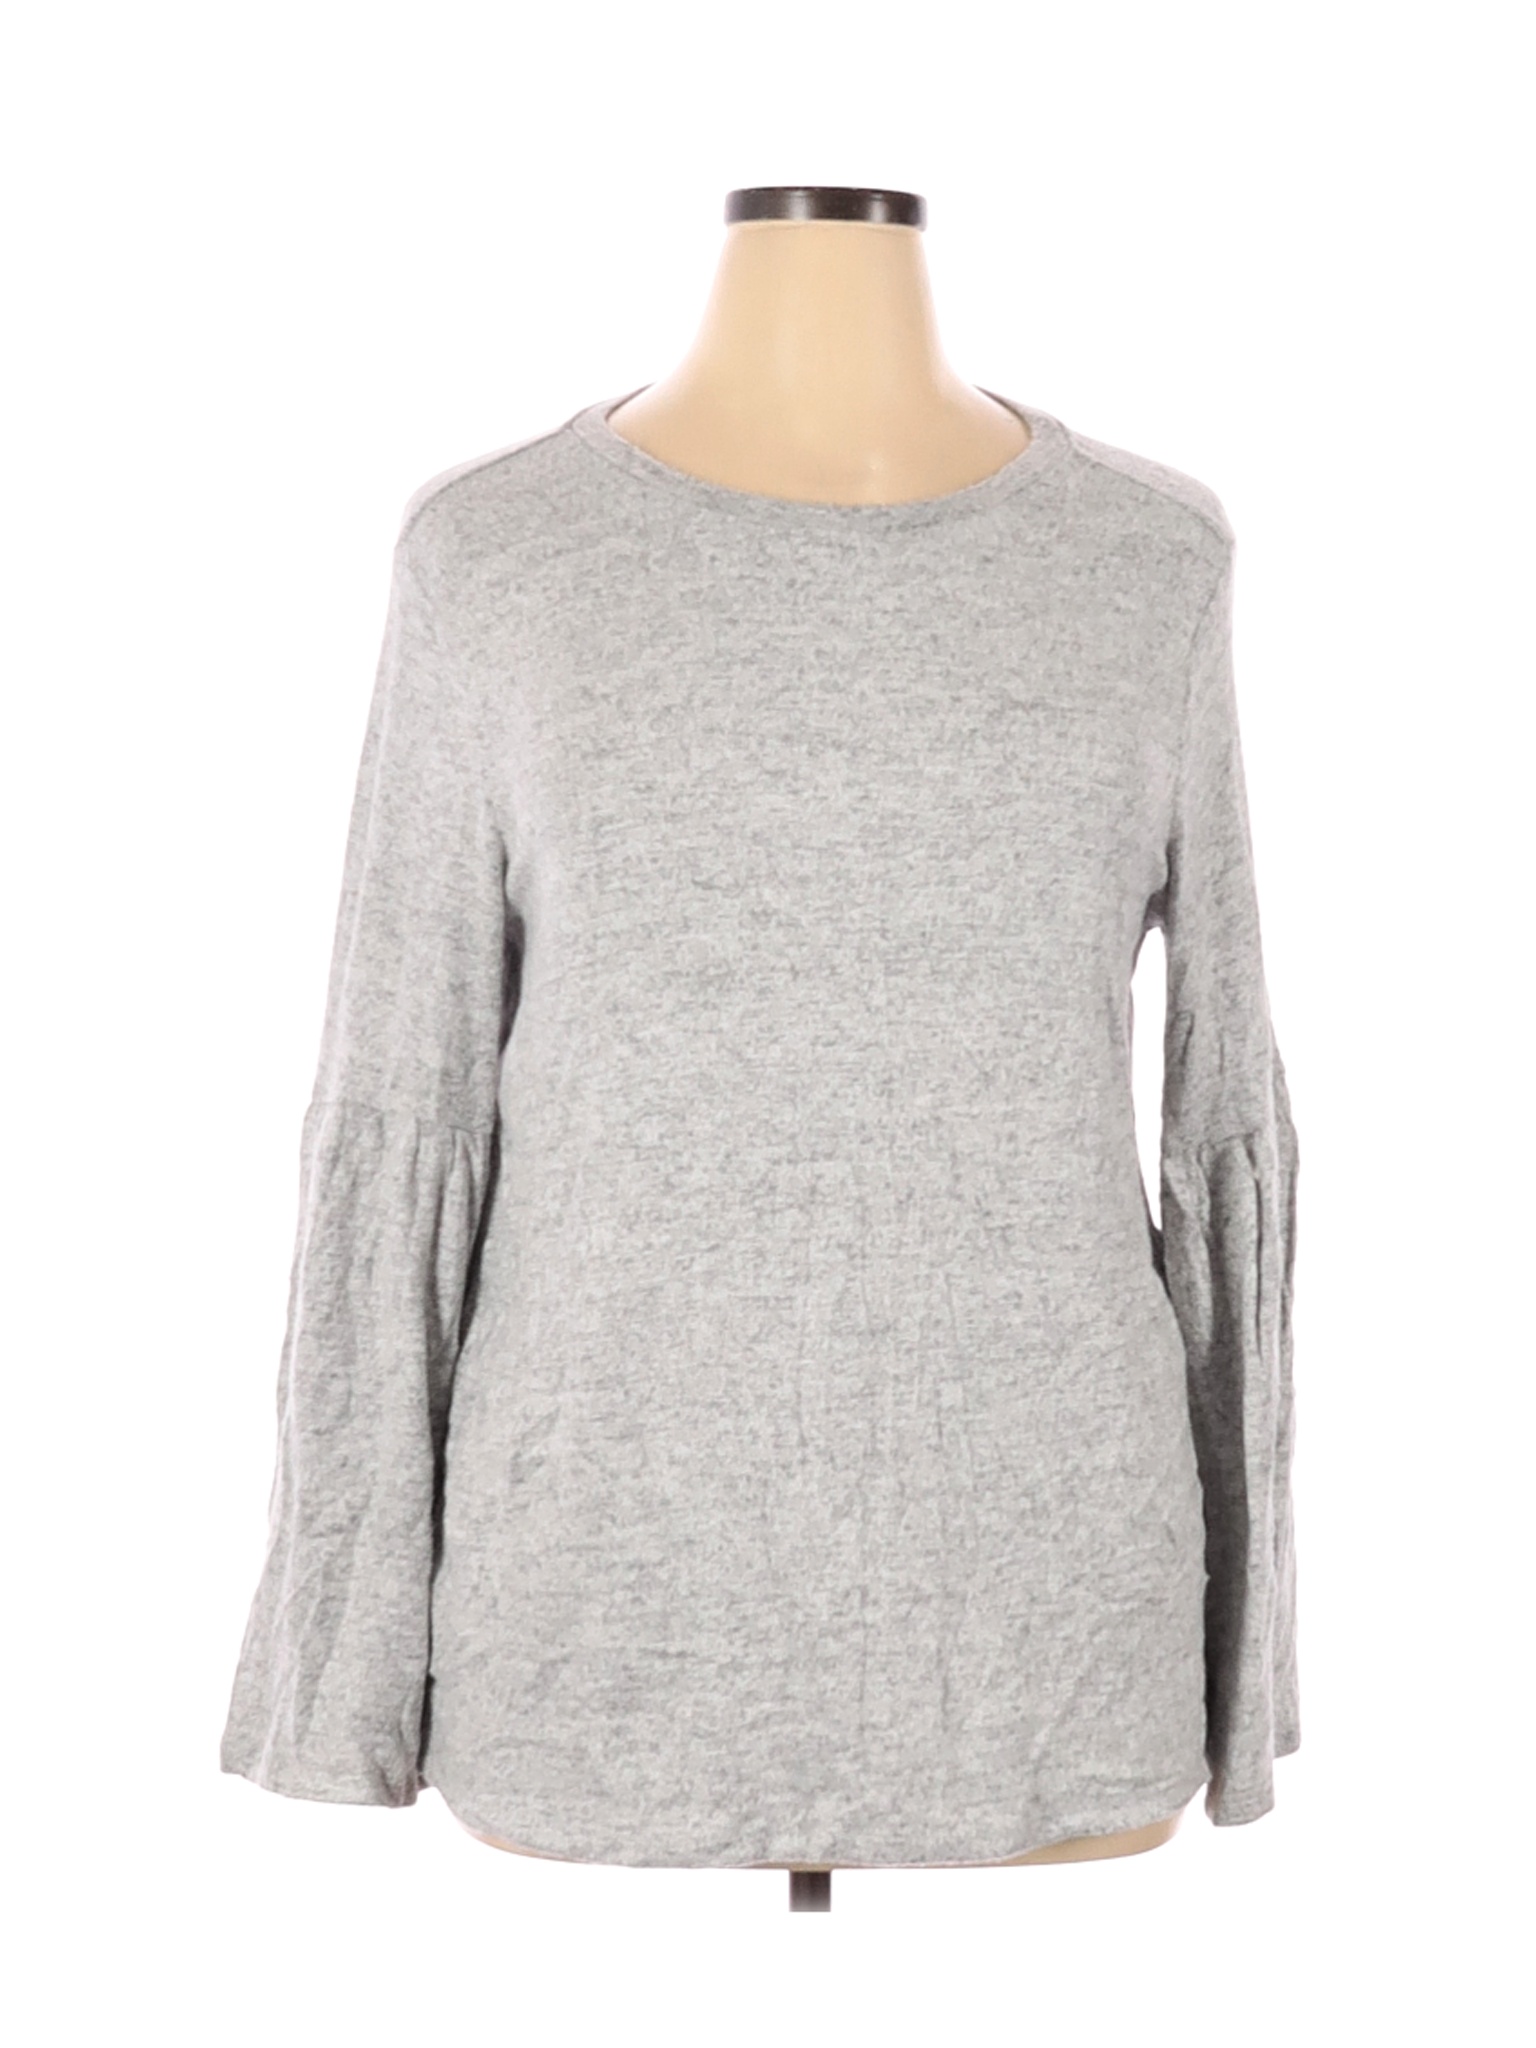 Philosophy Republic Clothing Women Gray Long Sleeve Top L | eBay